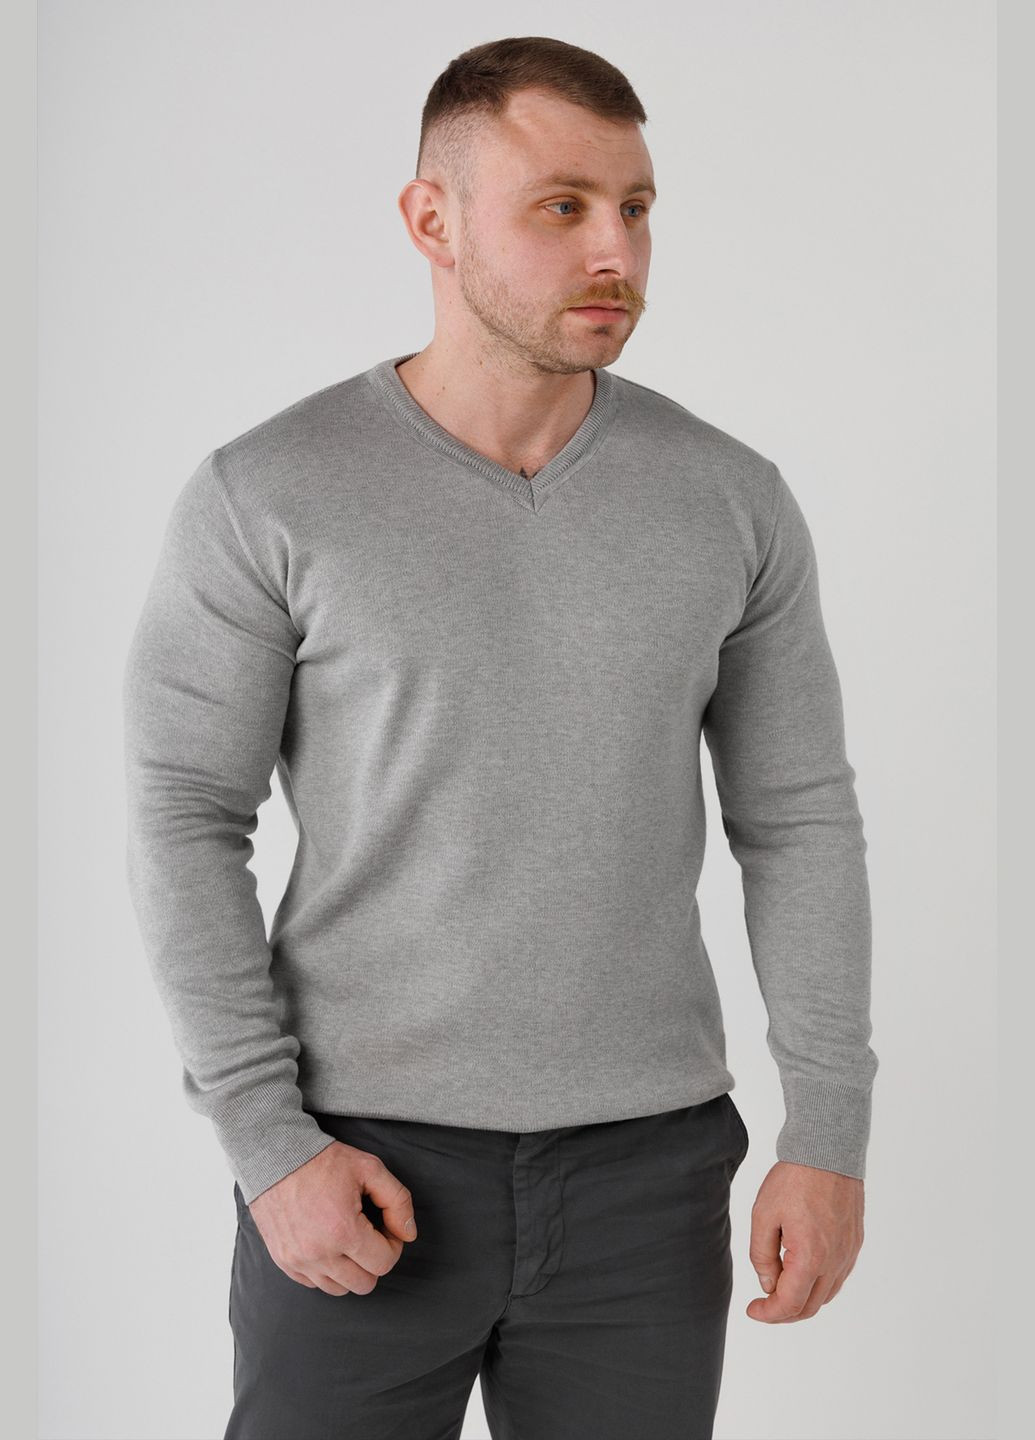 Светло-серый демисезонный пуловер пуловер Akin Trico